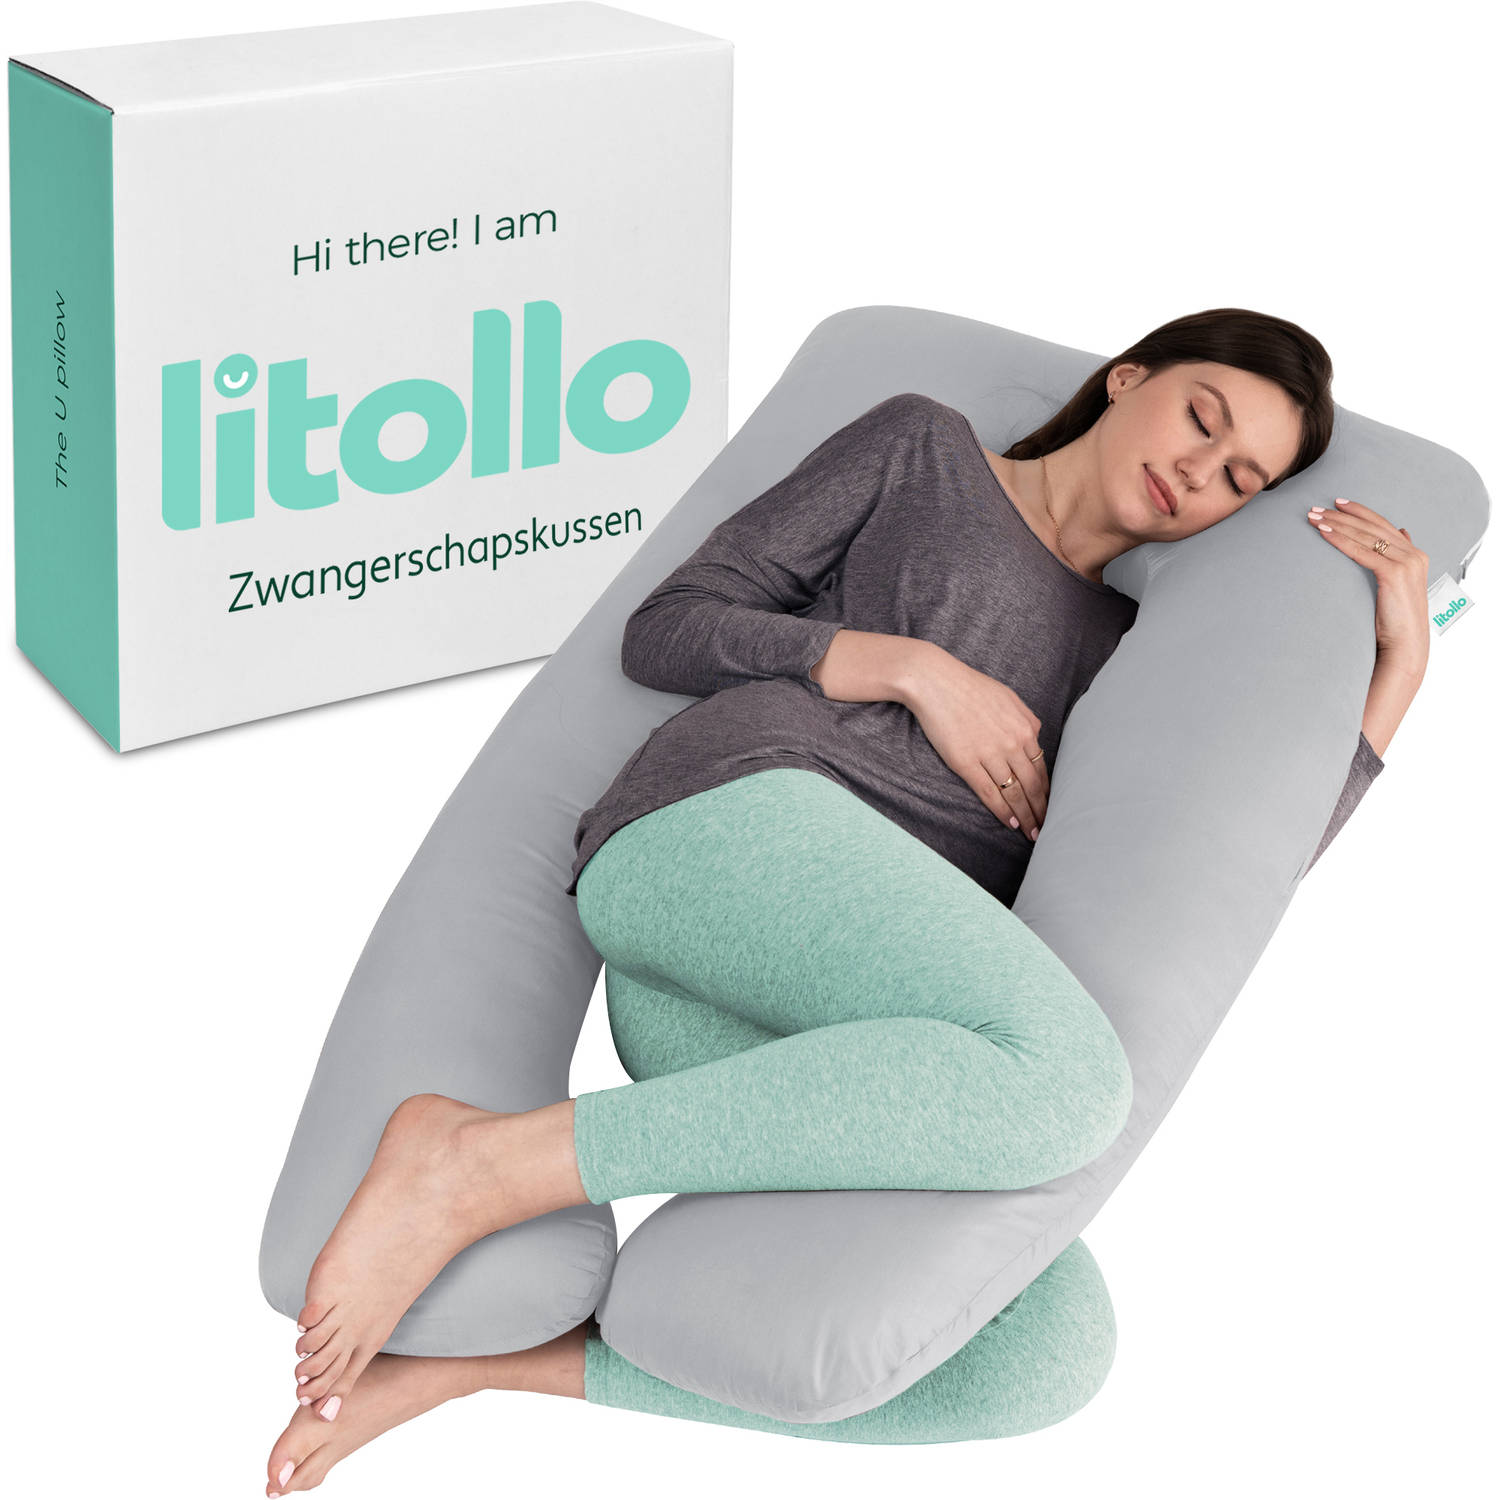 Litollo® Zwangerschapskussen Xxl Voedingskussen Lichaamskussen Body Pillow 280cm Afneembare Hoes -